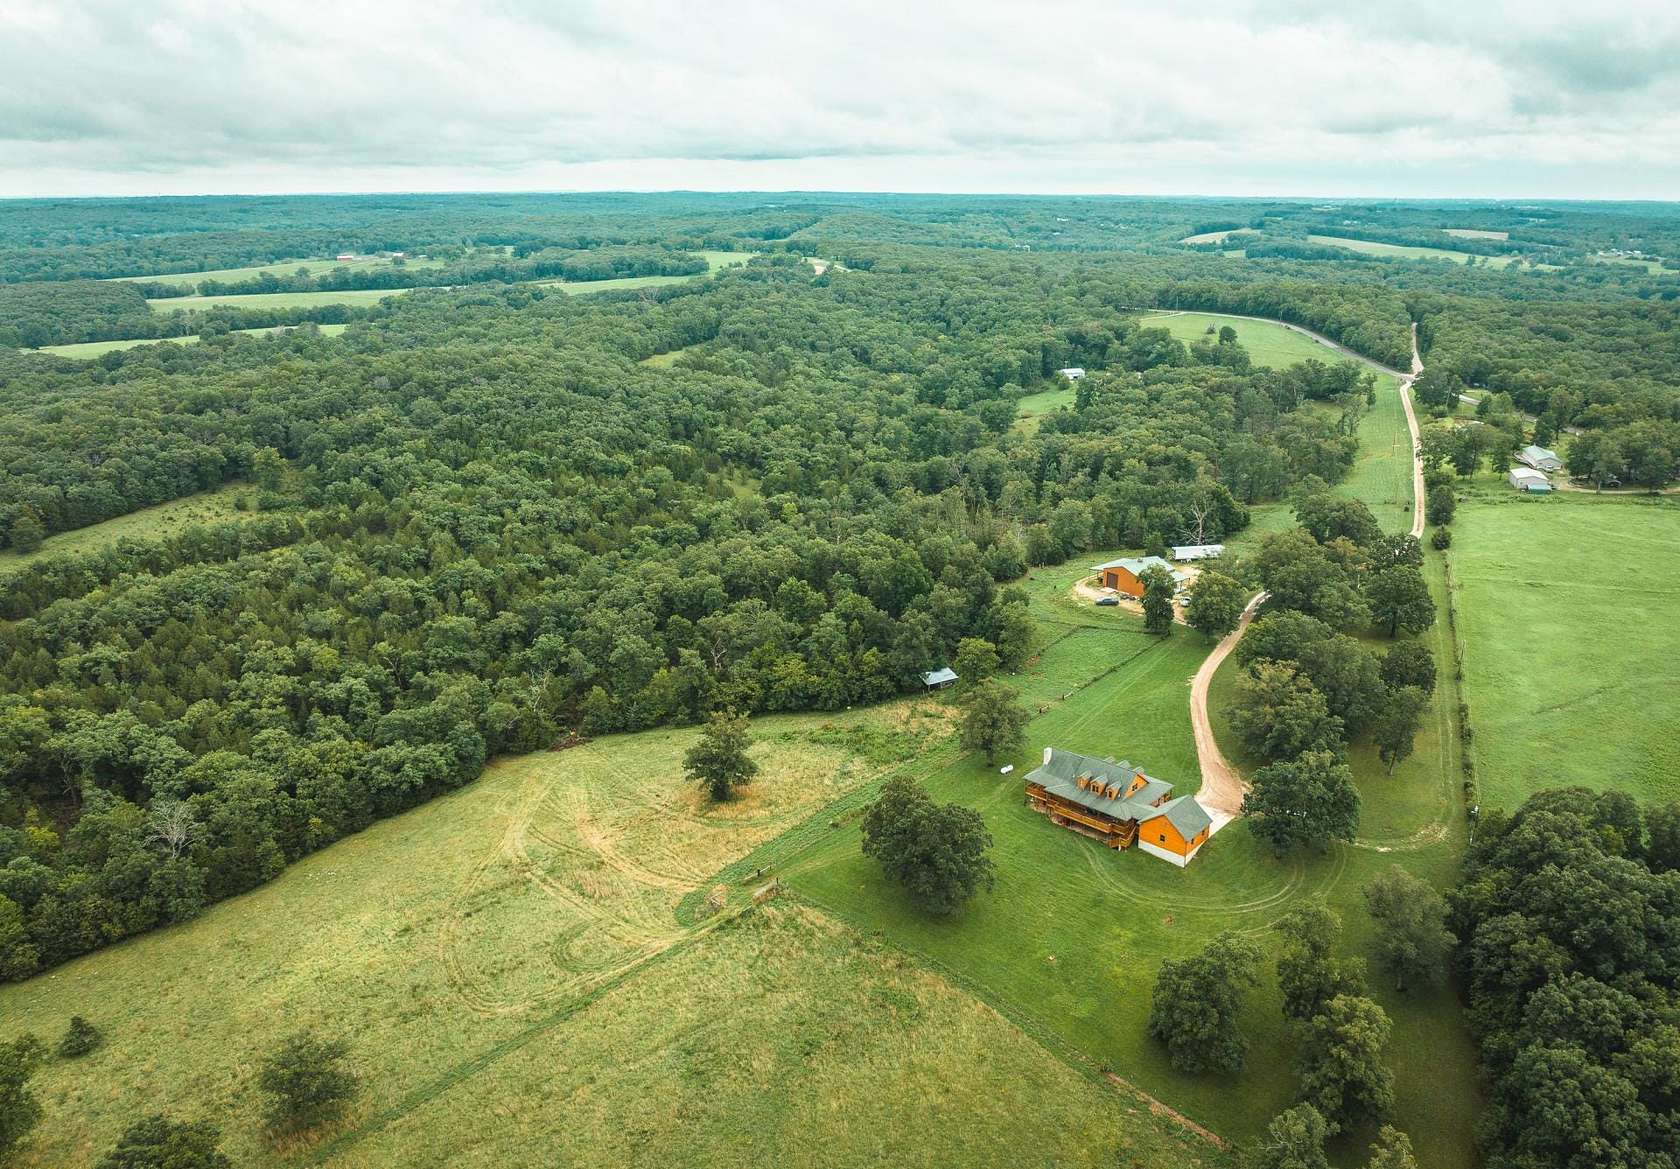 46 Acres of Improved Recreational Land & Farm for Sale in Sullivan, Missouri